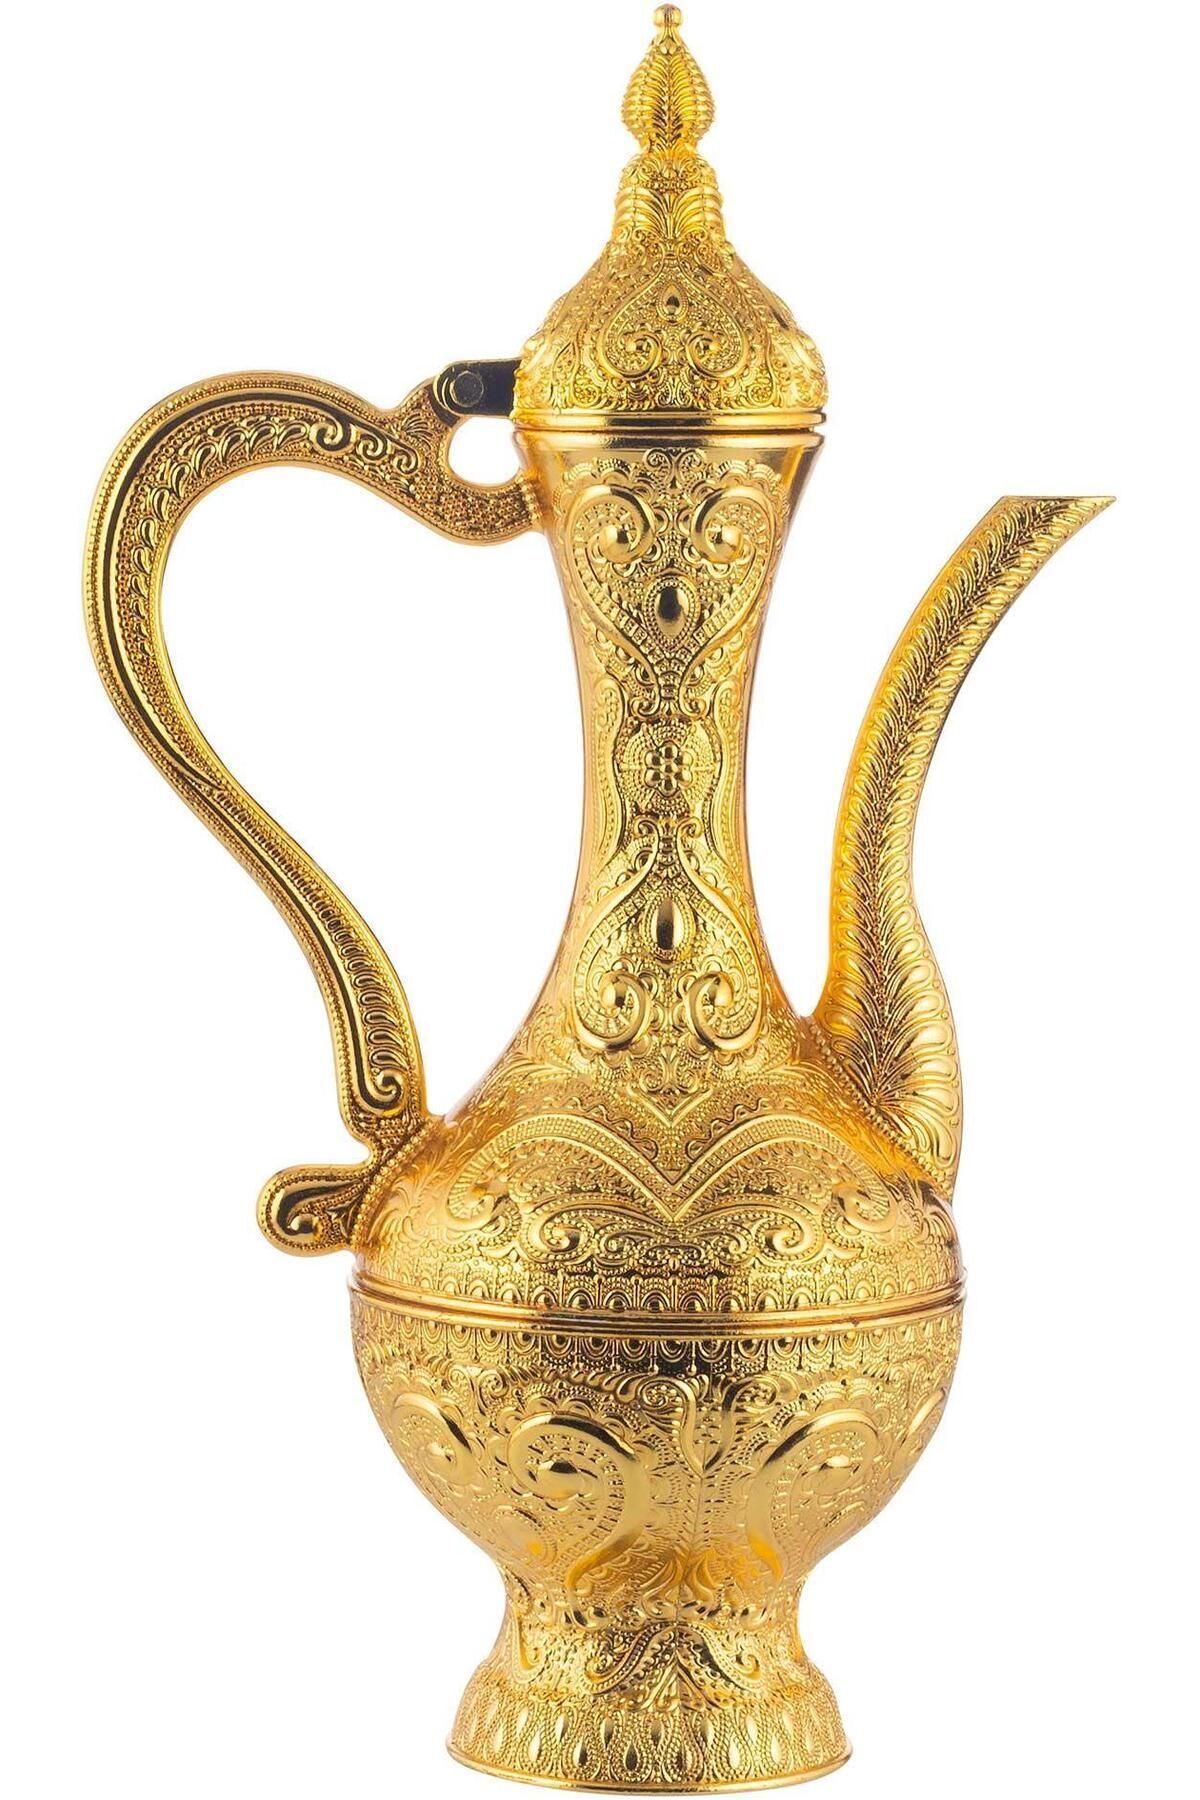 Saray Ottoman Zemzem Ibrik Telkarili Altın